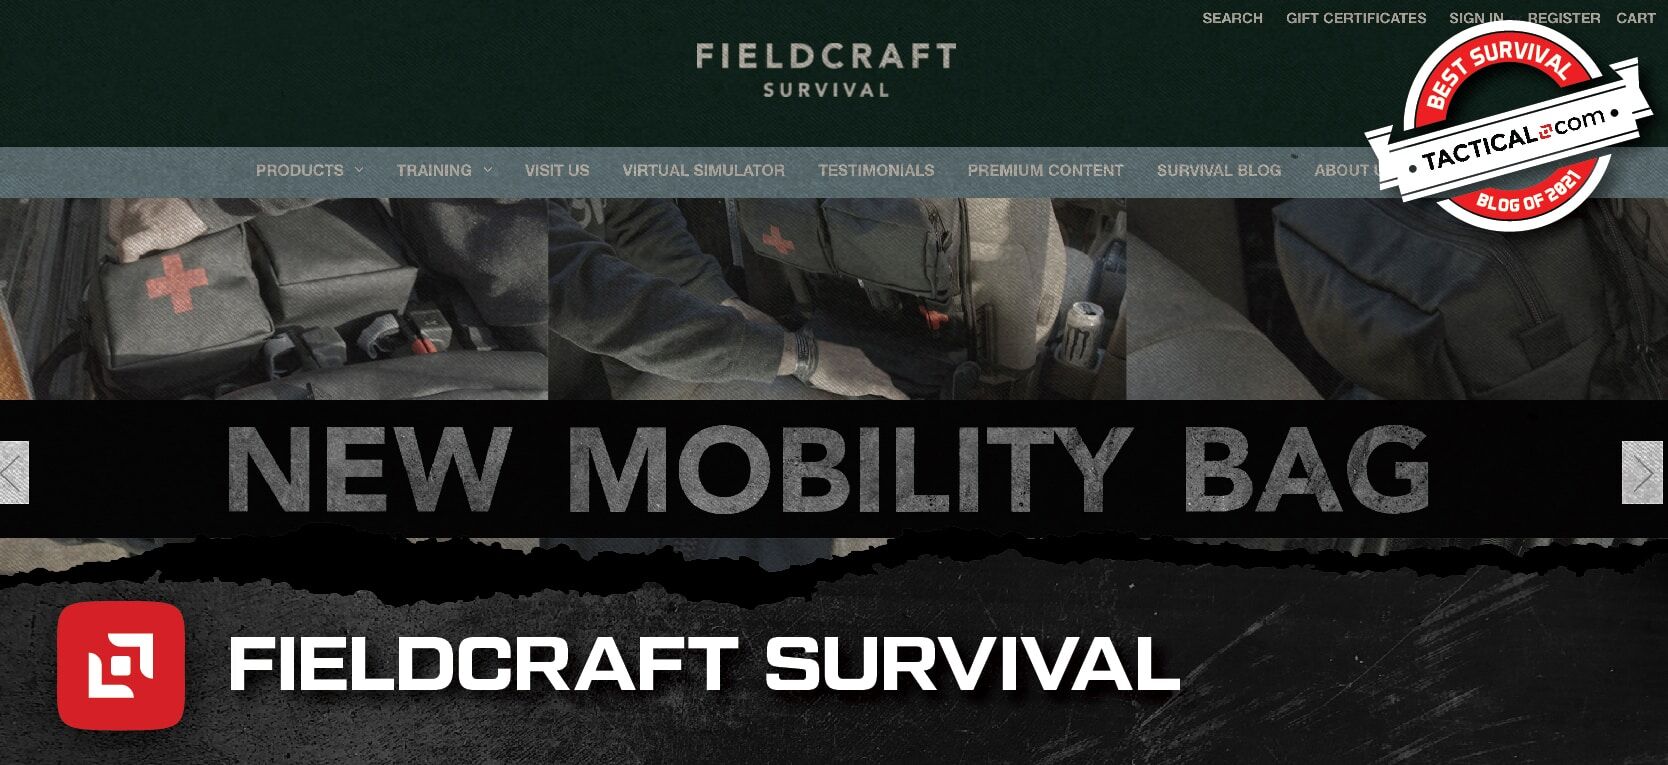 Fieldcraft Survival homepage